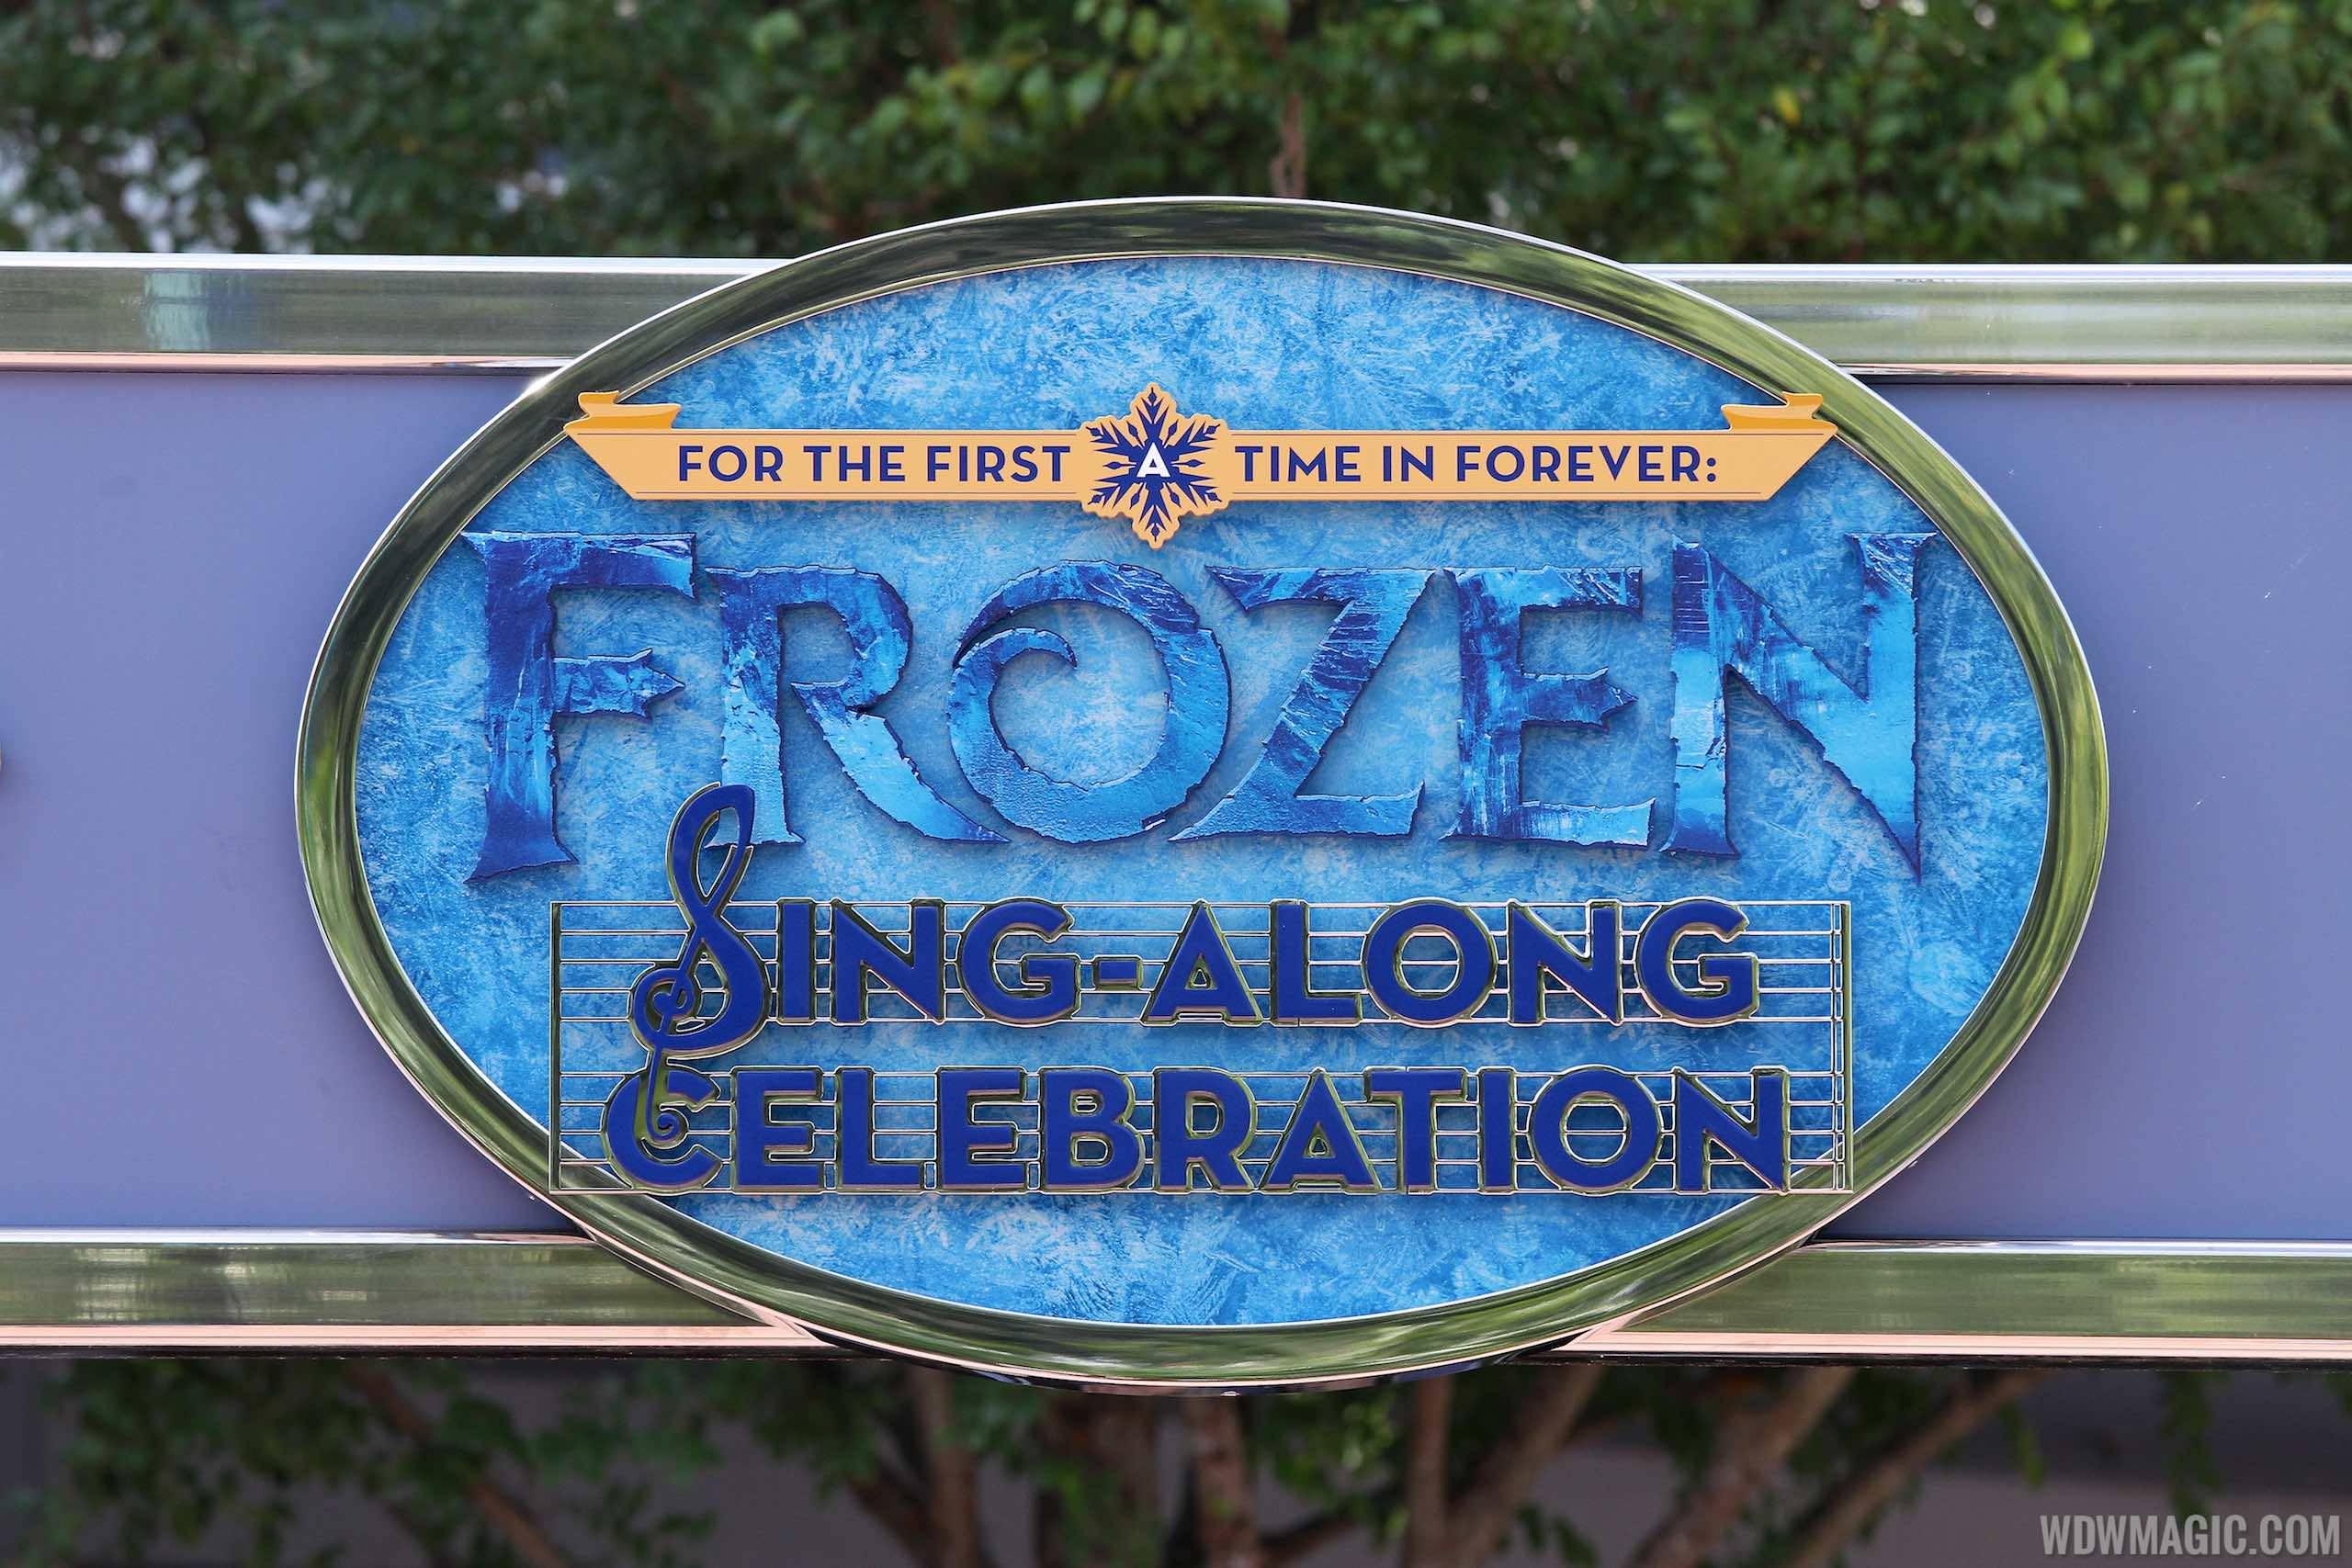 'Frozen' Summer Fun - Live at Disney's Hollywood Studios